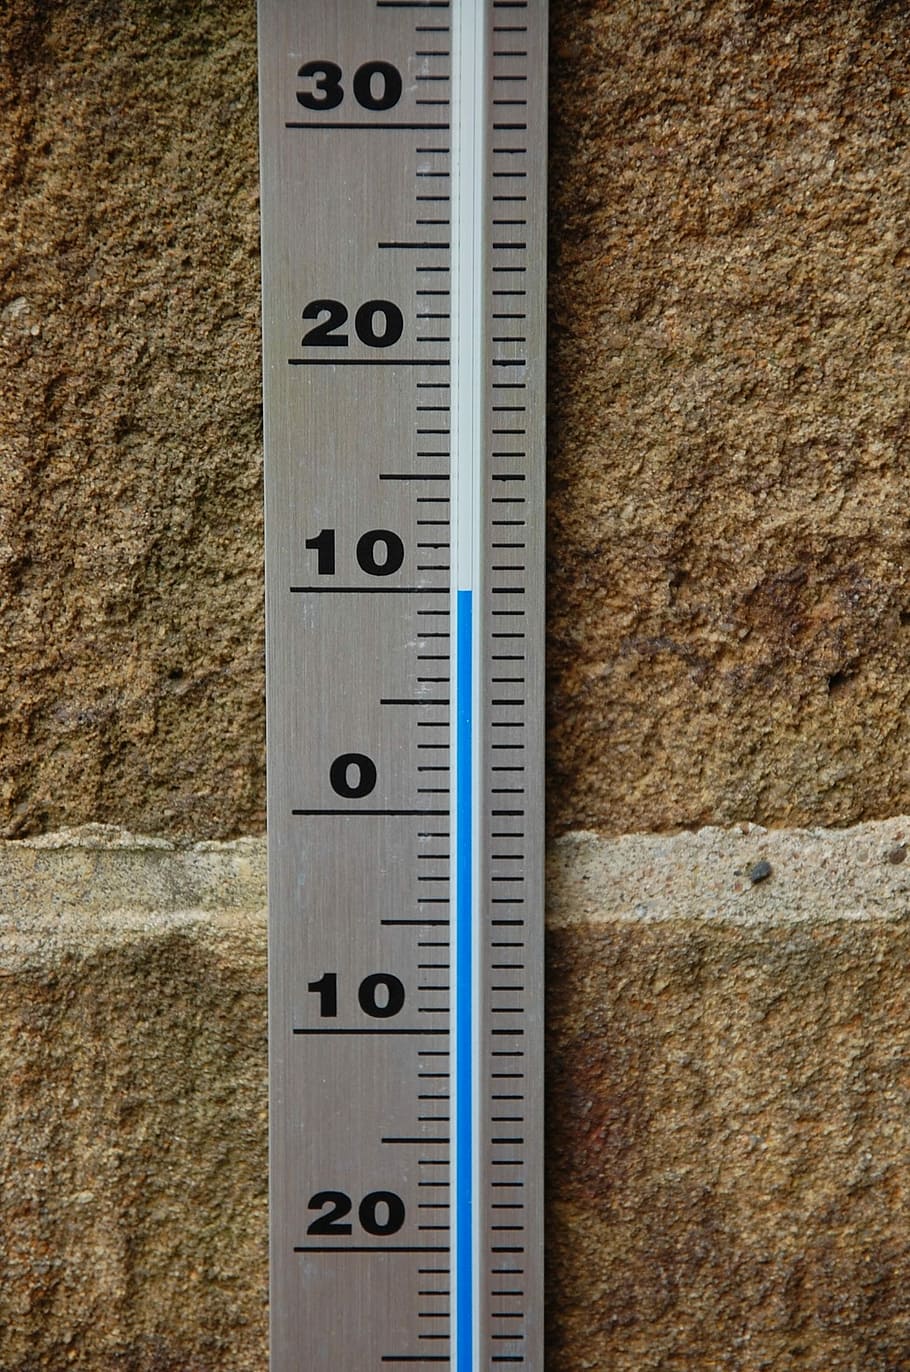 Termometer, Suhu, Skala, tampilan suhu, sepuluh, 10, instrumen pengukuran, akurasi, penggaris, jumlah